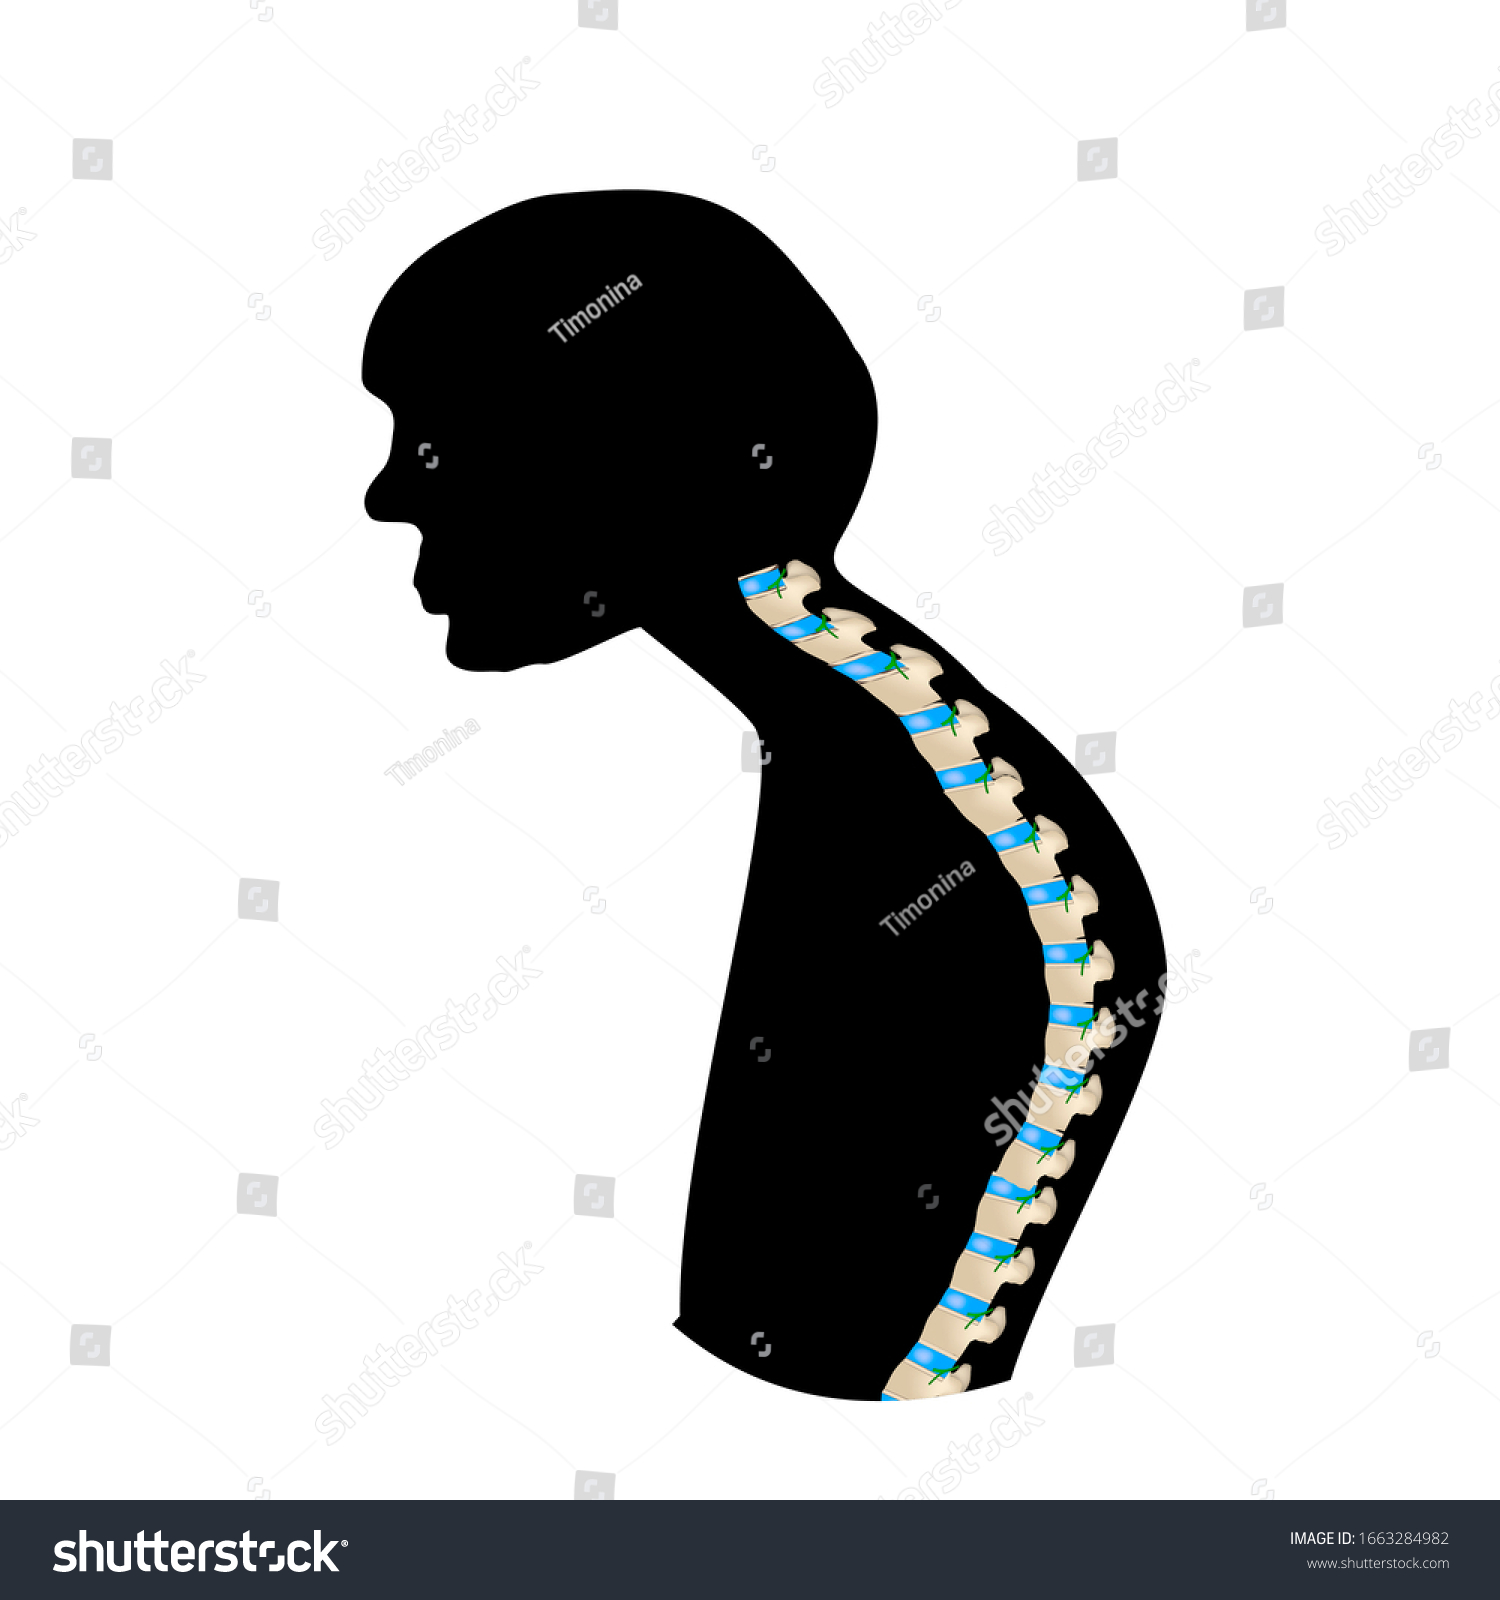 Position Spine Kyphosis Black White Silhouette Stock Illustration ...